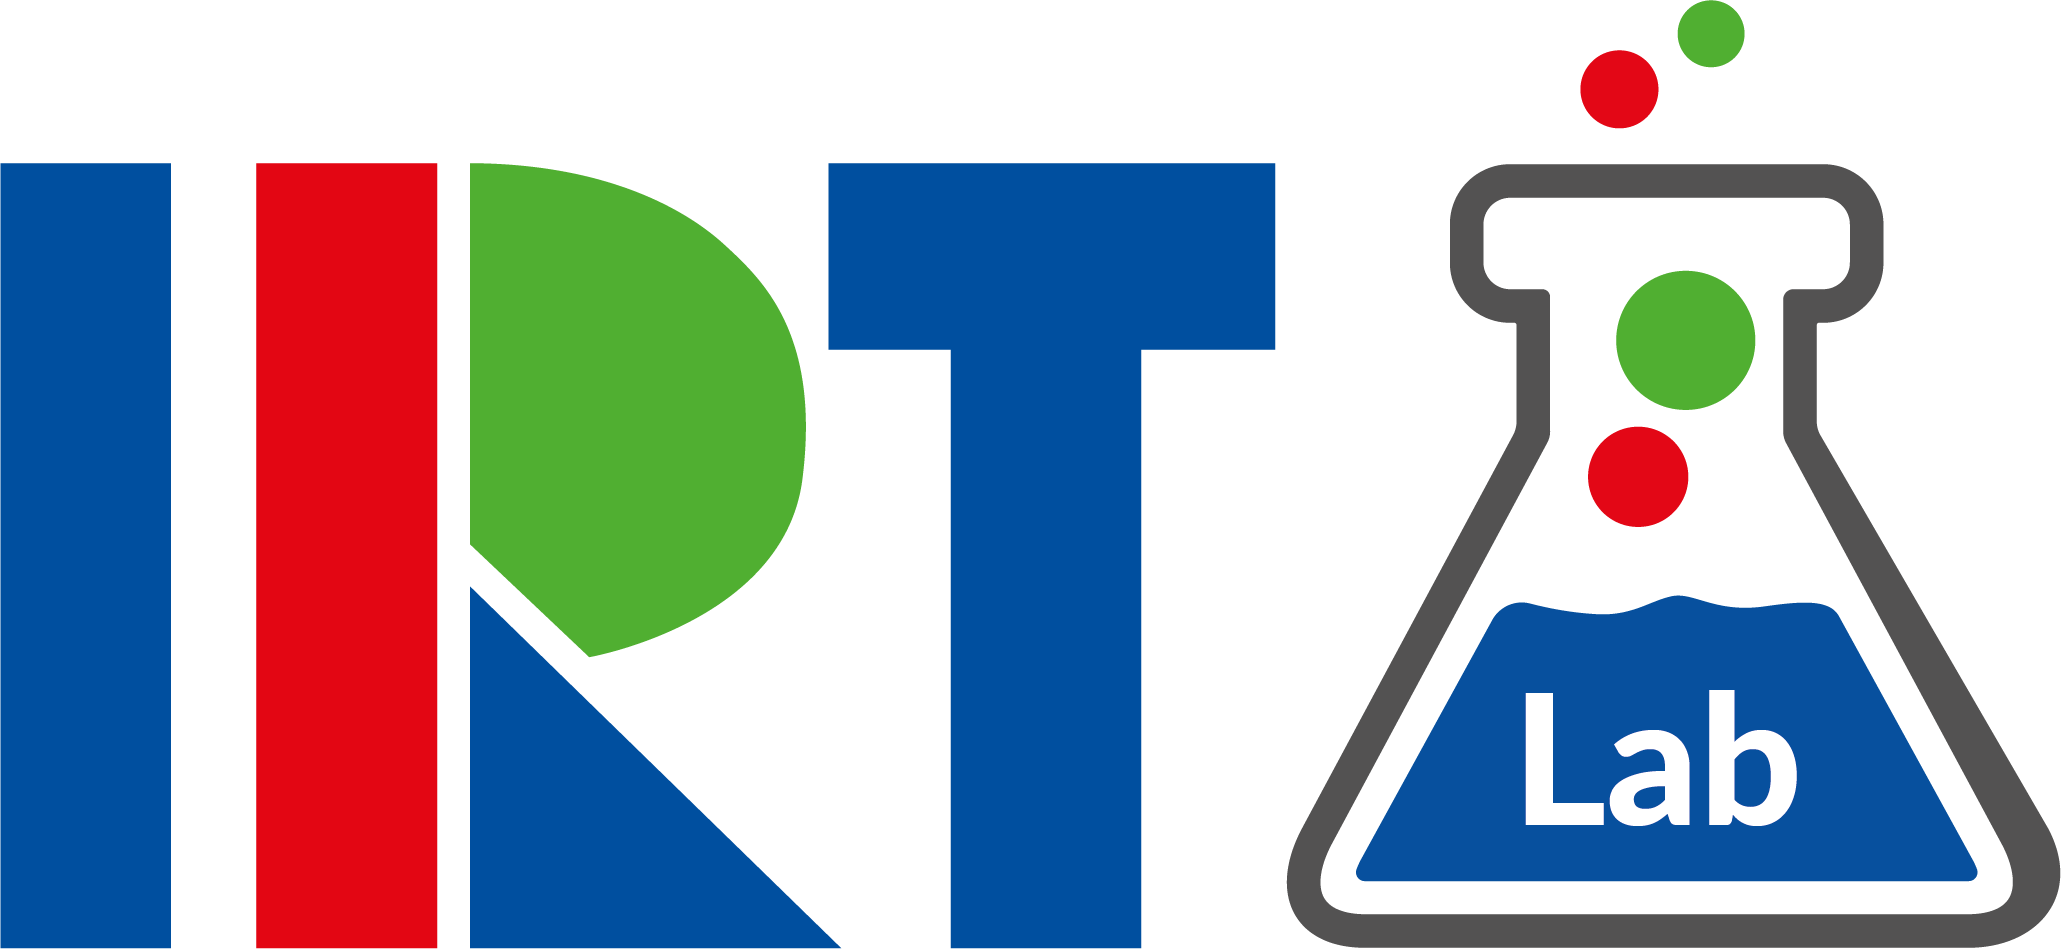 IRT Logo - IRT Lab